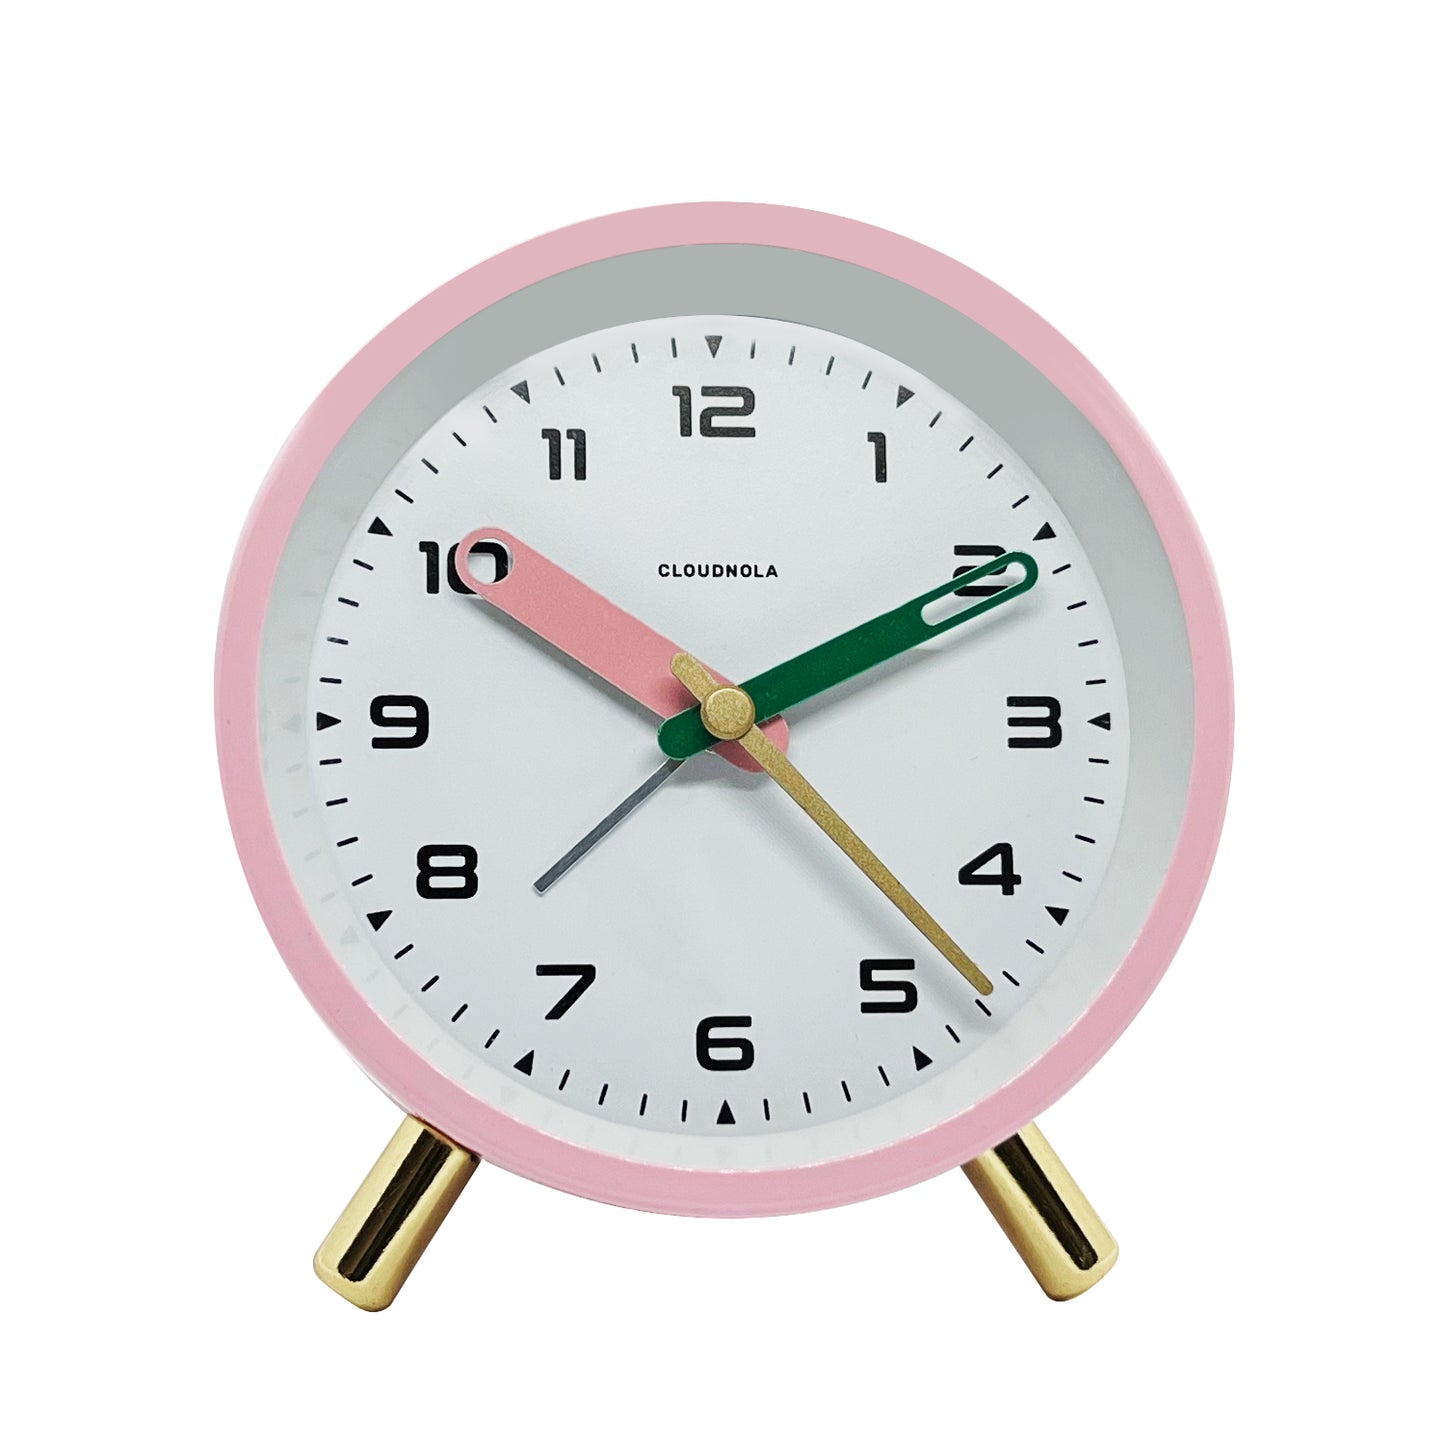 Studio Miami Pink Alarm Clock - Glamorous Golden Legs - LED Illumination